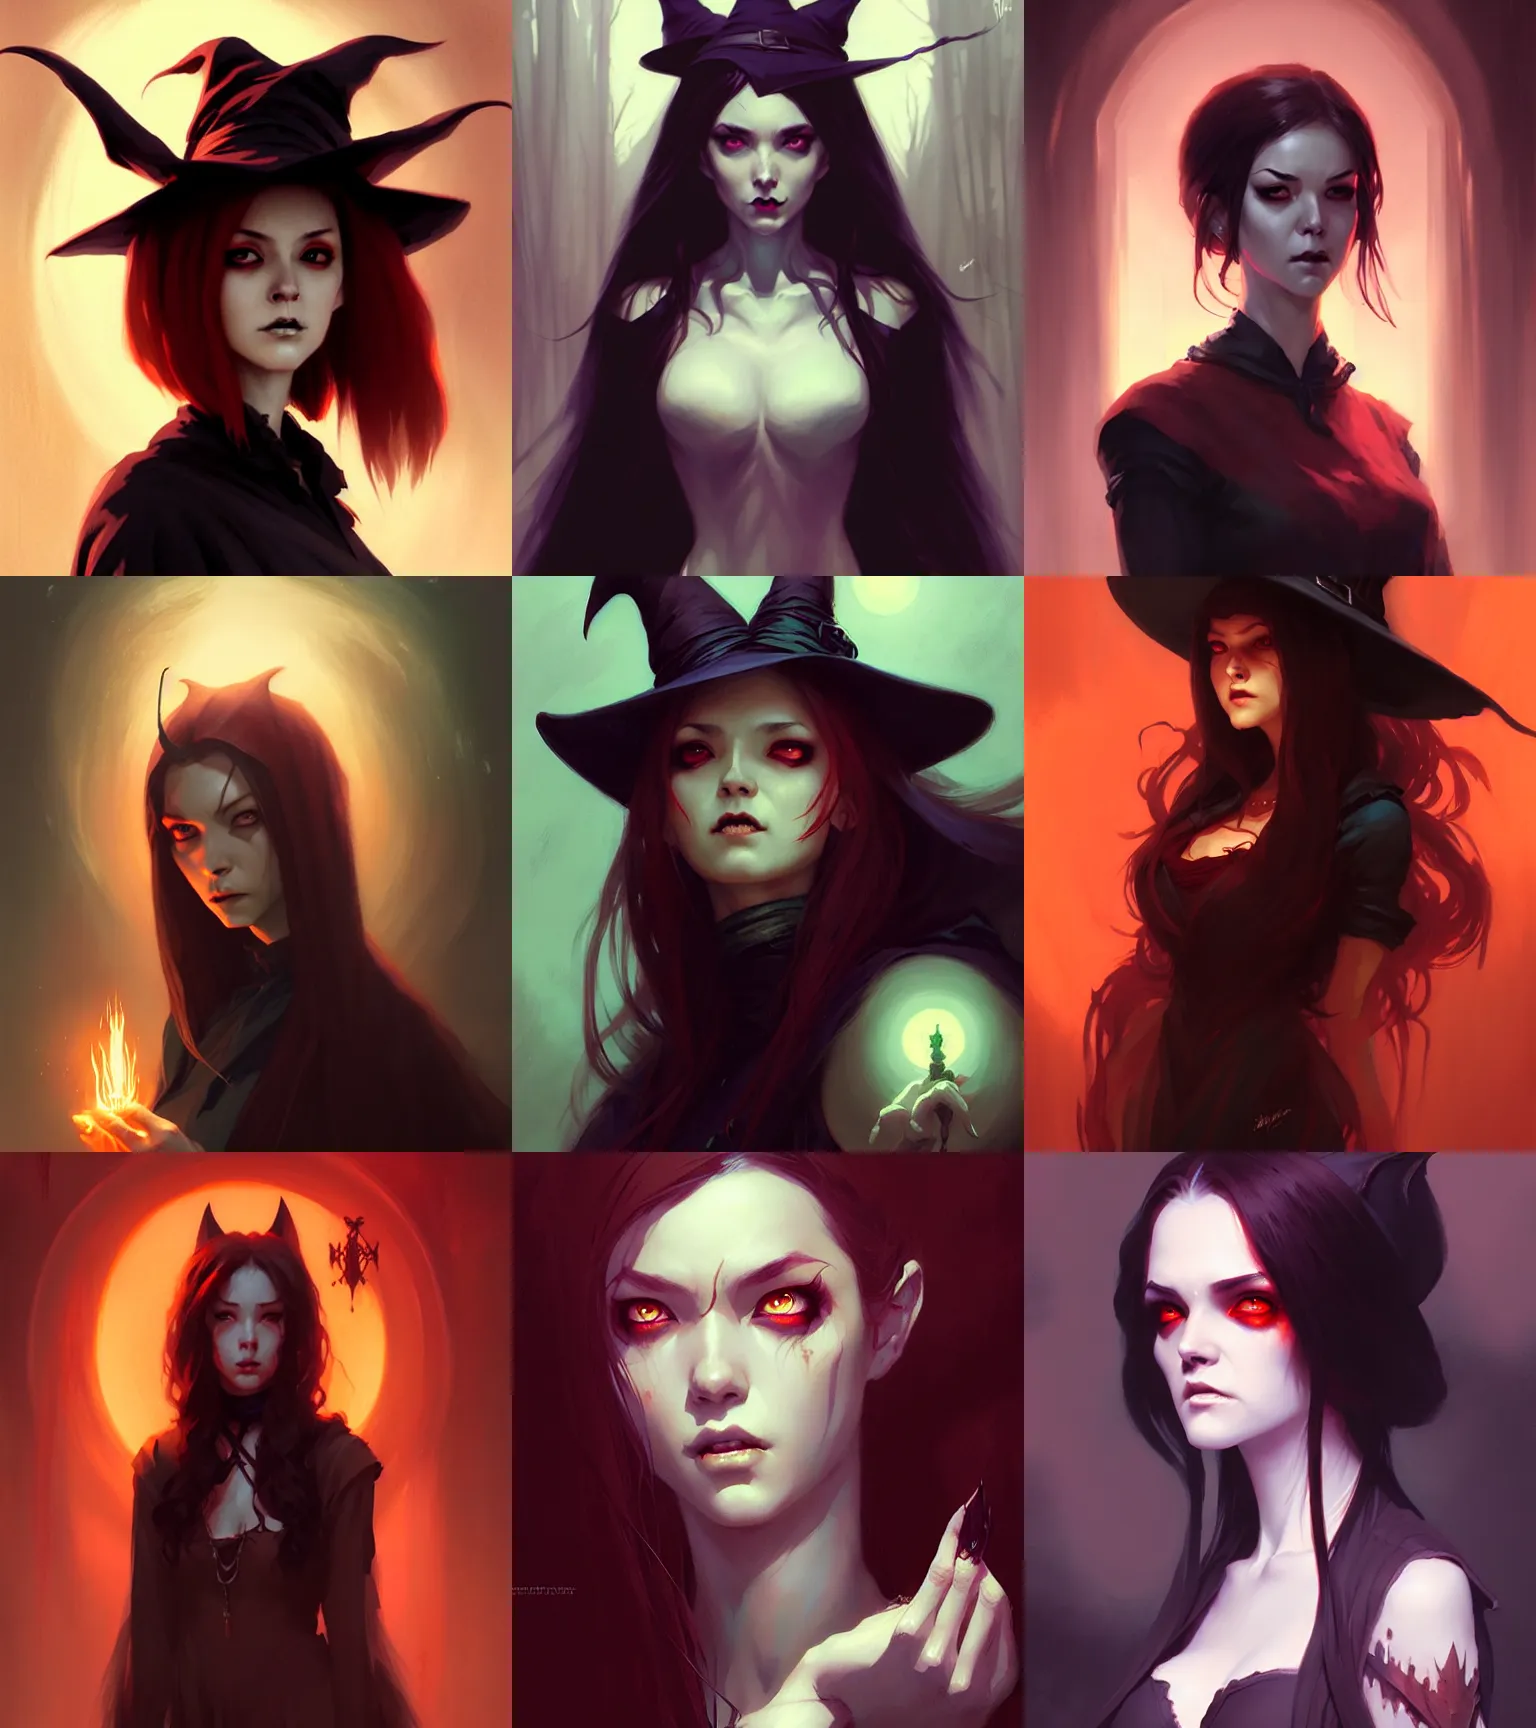 Prompt: portrait female witch, horror, art by bayard wu, charlie bowater, ross tran, artgerm, greg rutkowski, andreas rocha, ruan ija, ilya kuvshinov